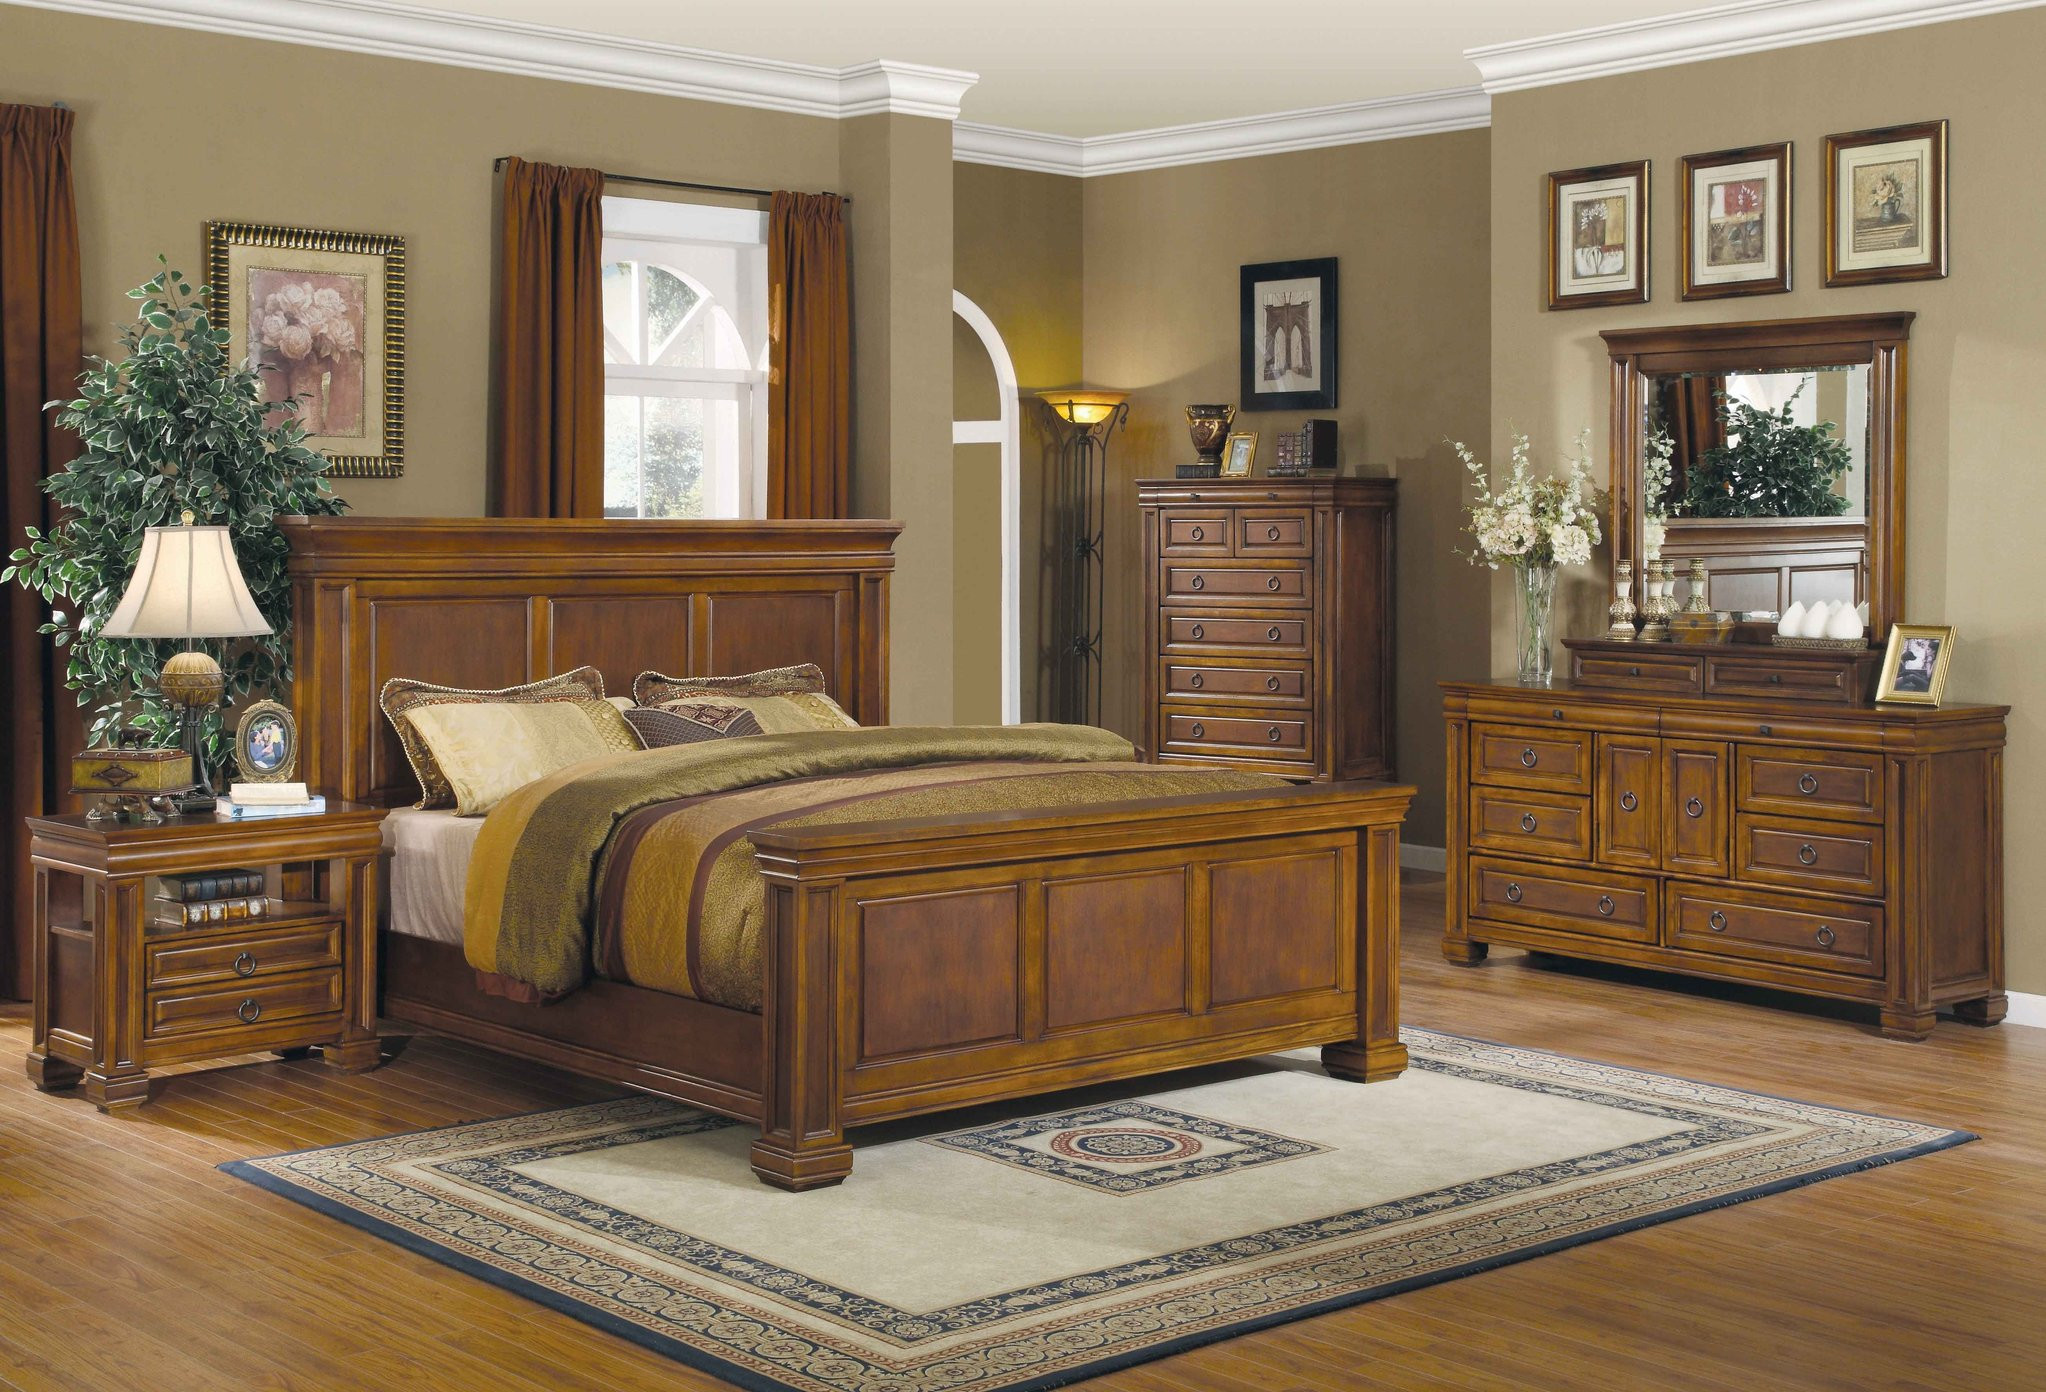 Rustic Bedroom Sets
 Antique Rustic Bedroom Furniture Wood King and Queen